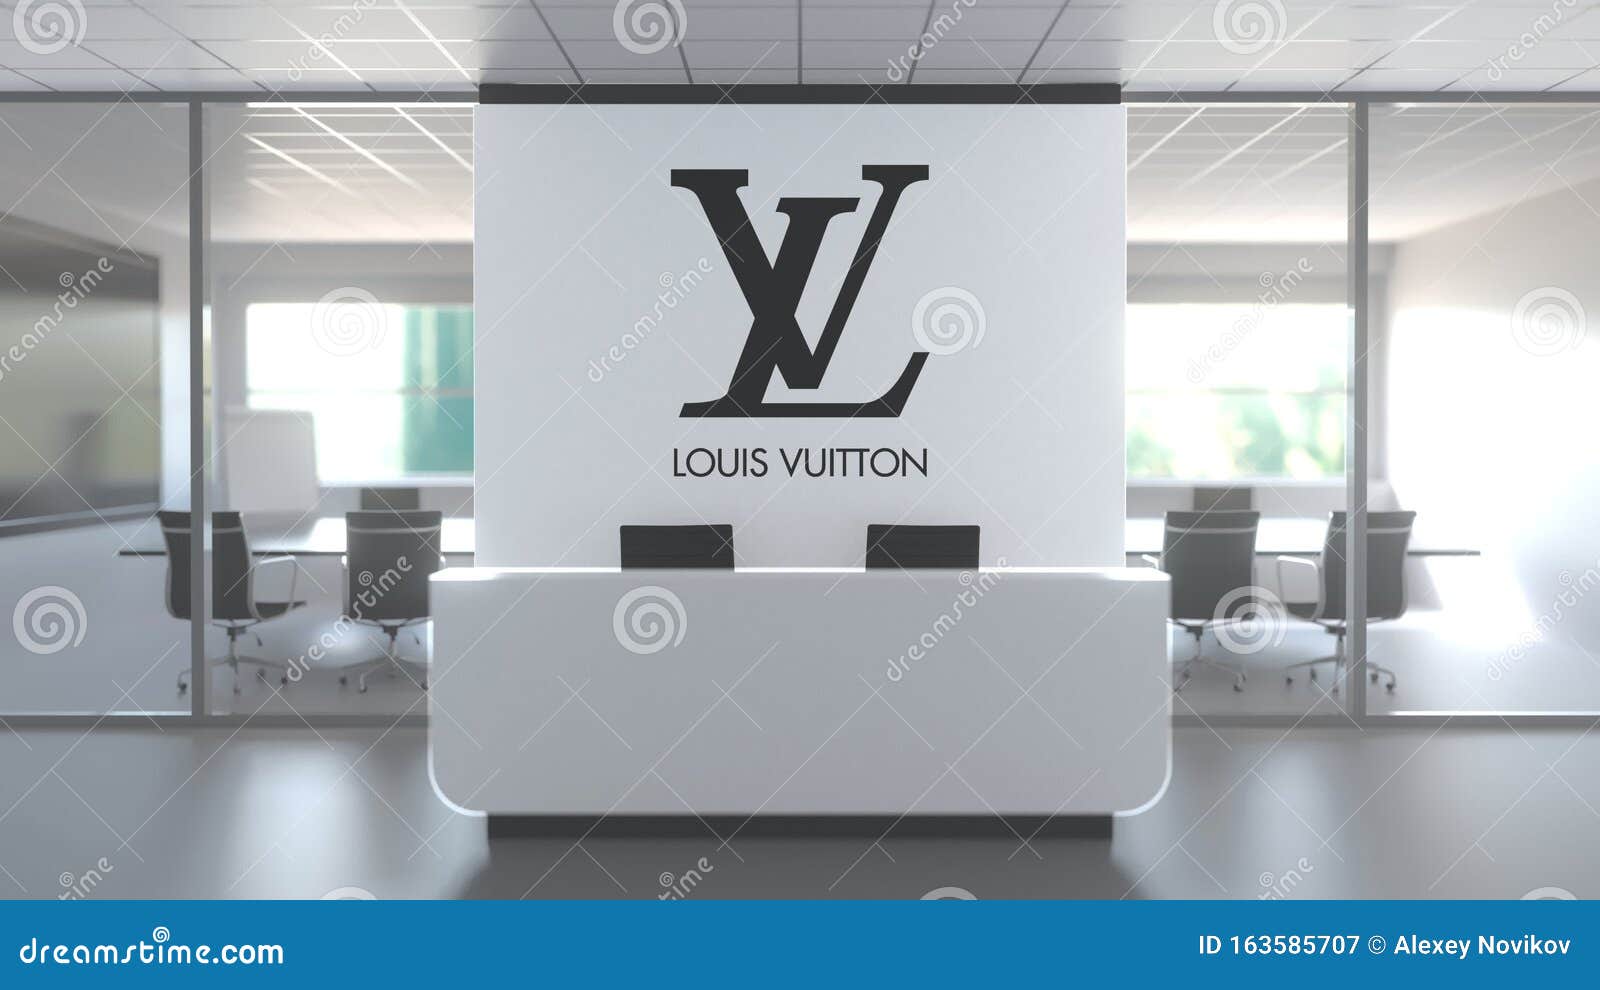 LOUIS VUITTON Logo Above Reception Desk in the Modern Office